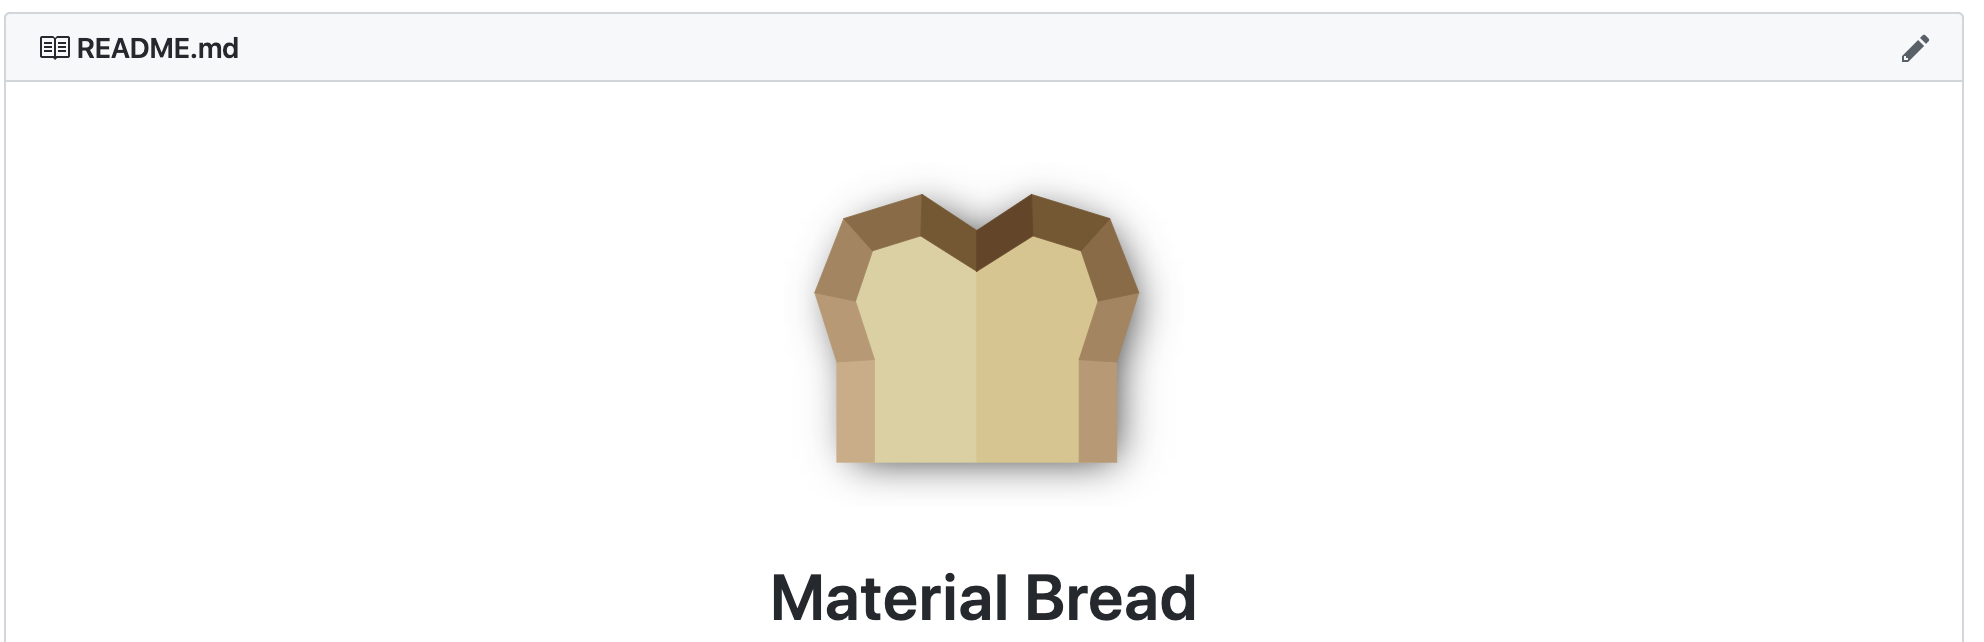 Material Bread Readme Centered Logo